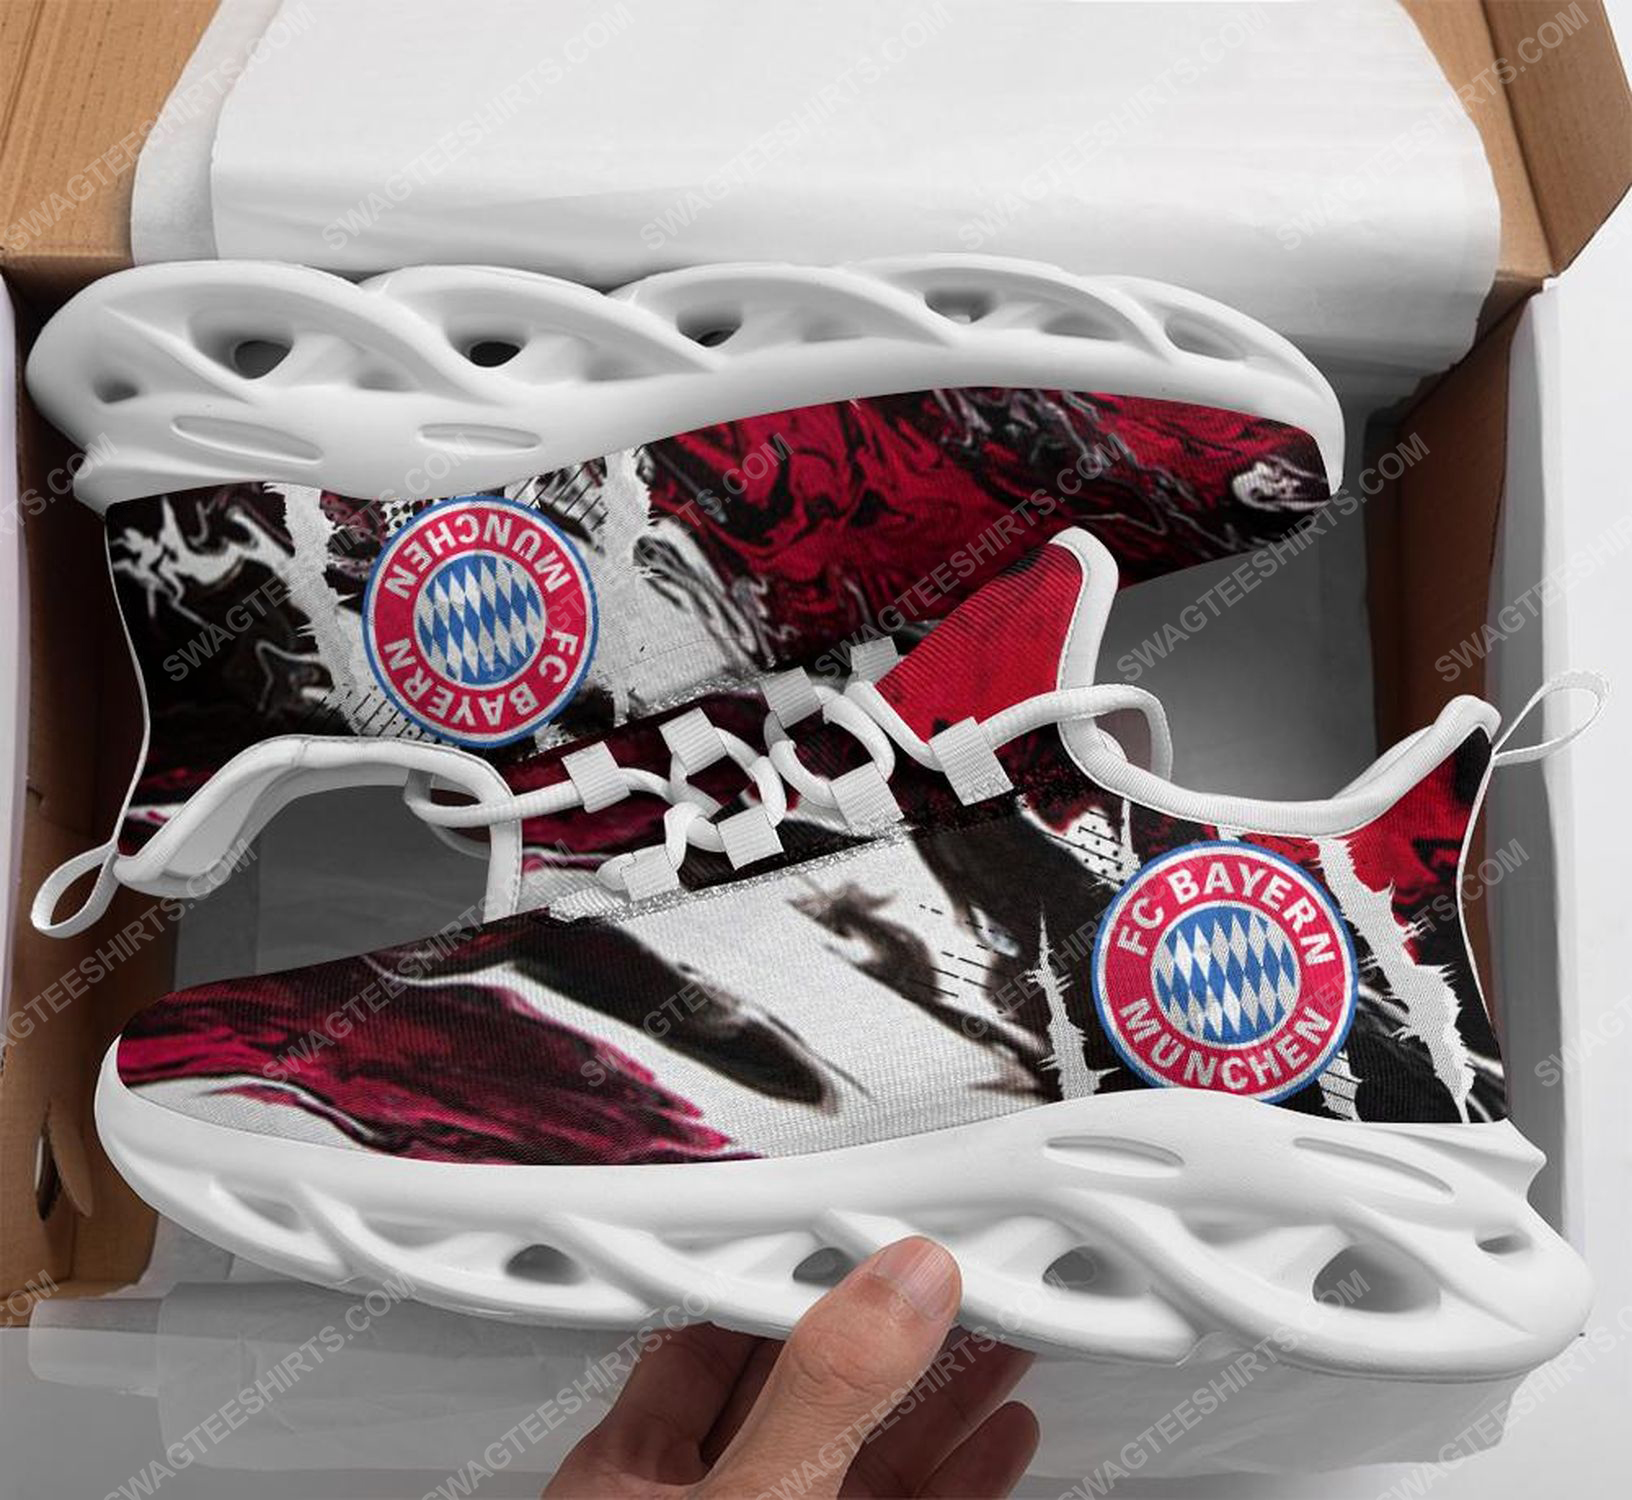 [special edition] The bayern munich football club max soul shoes – Maria